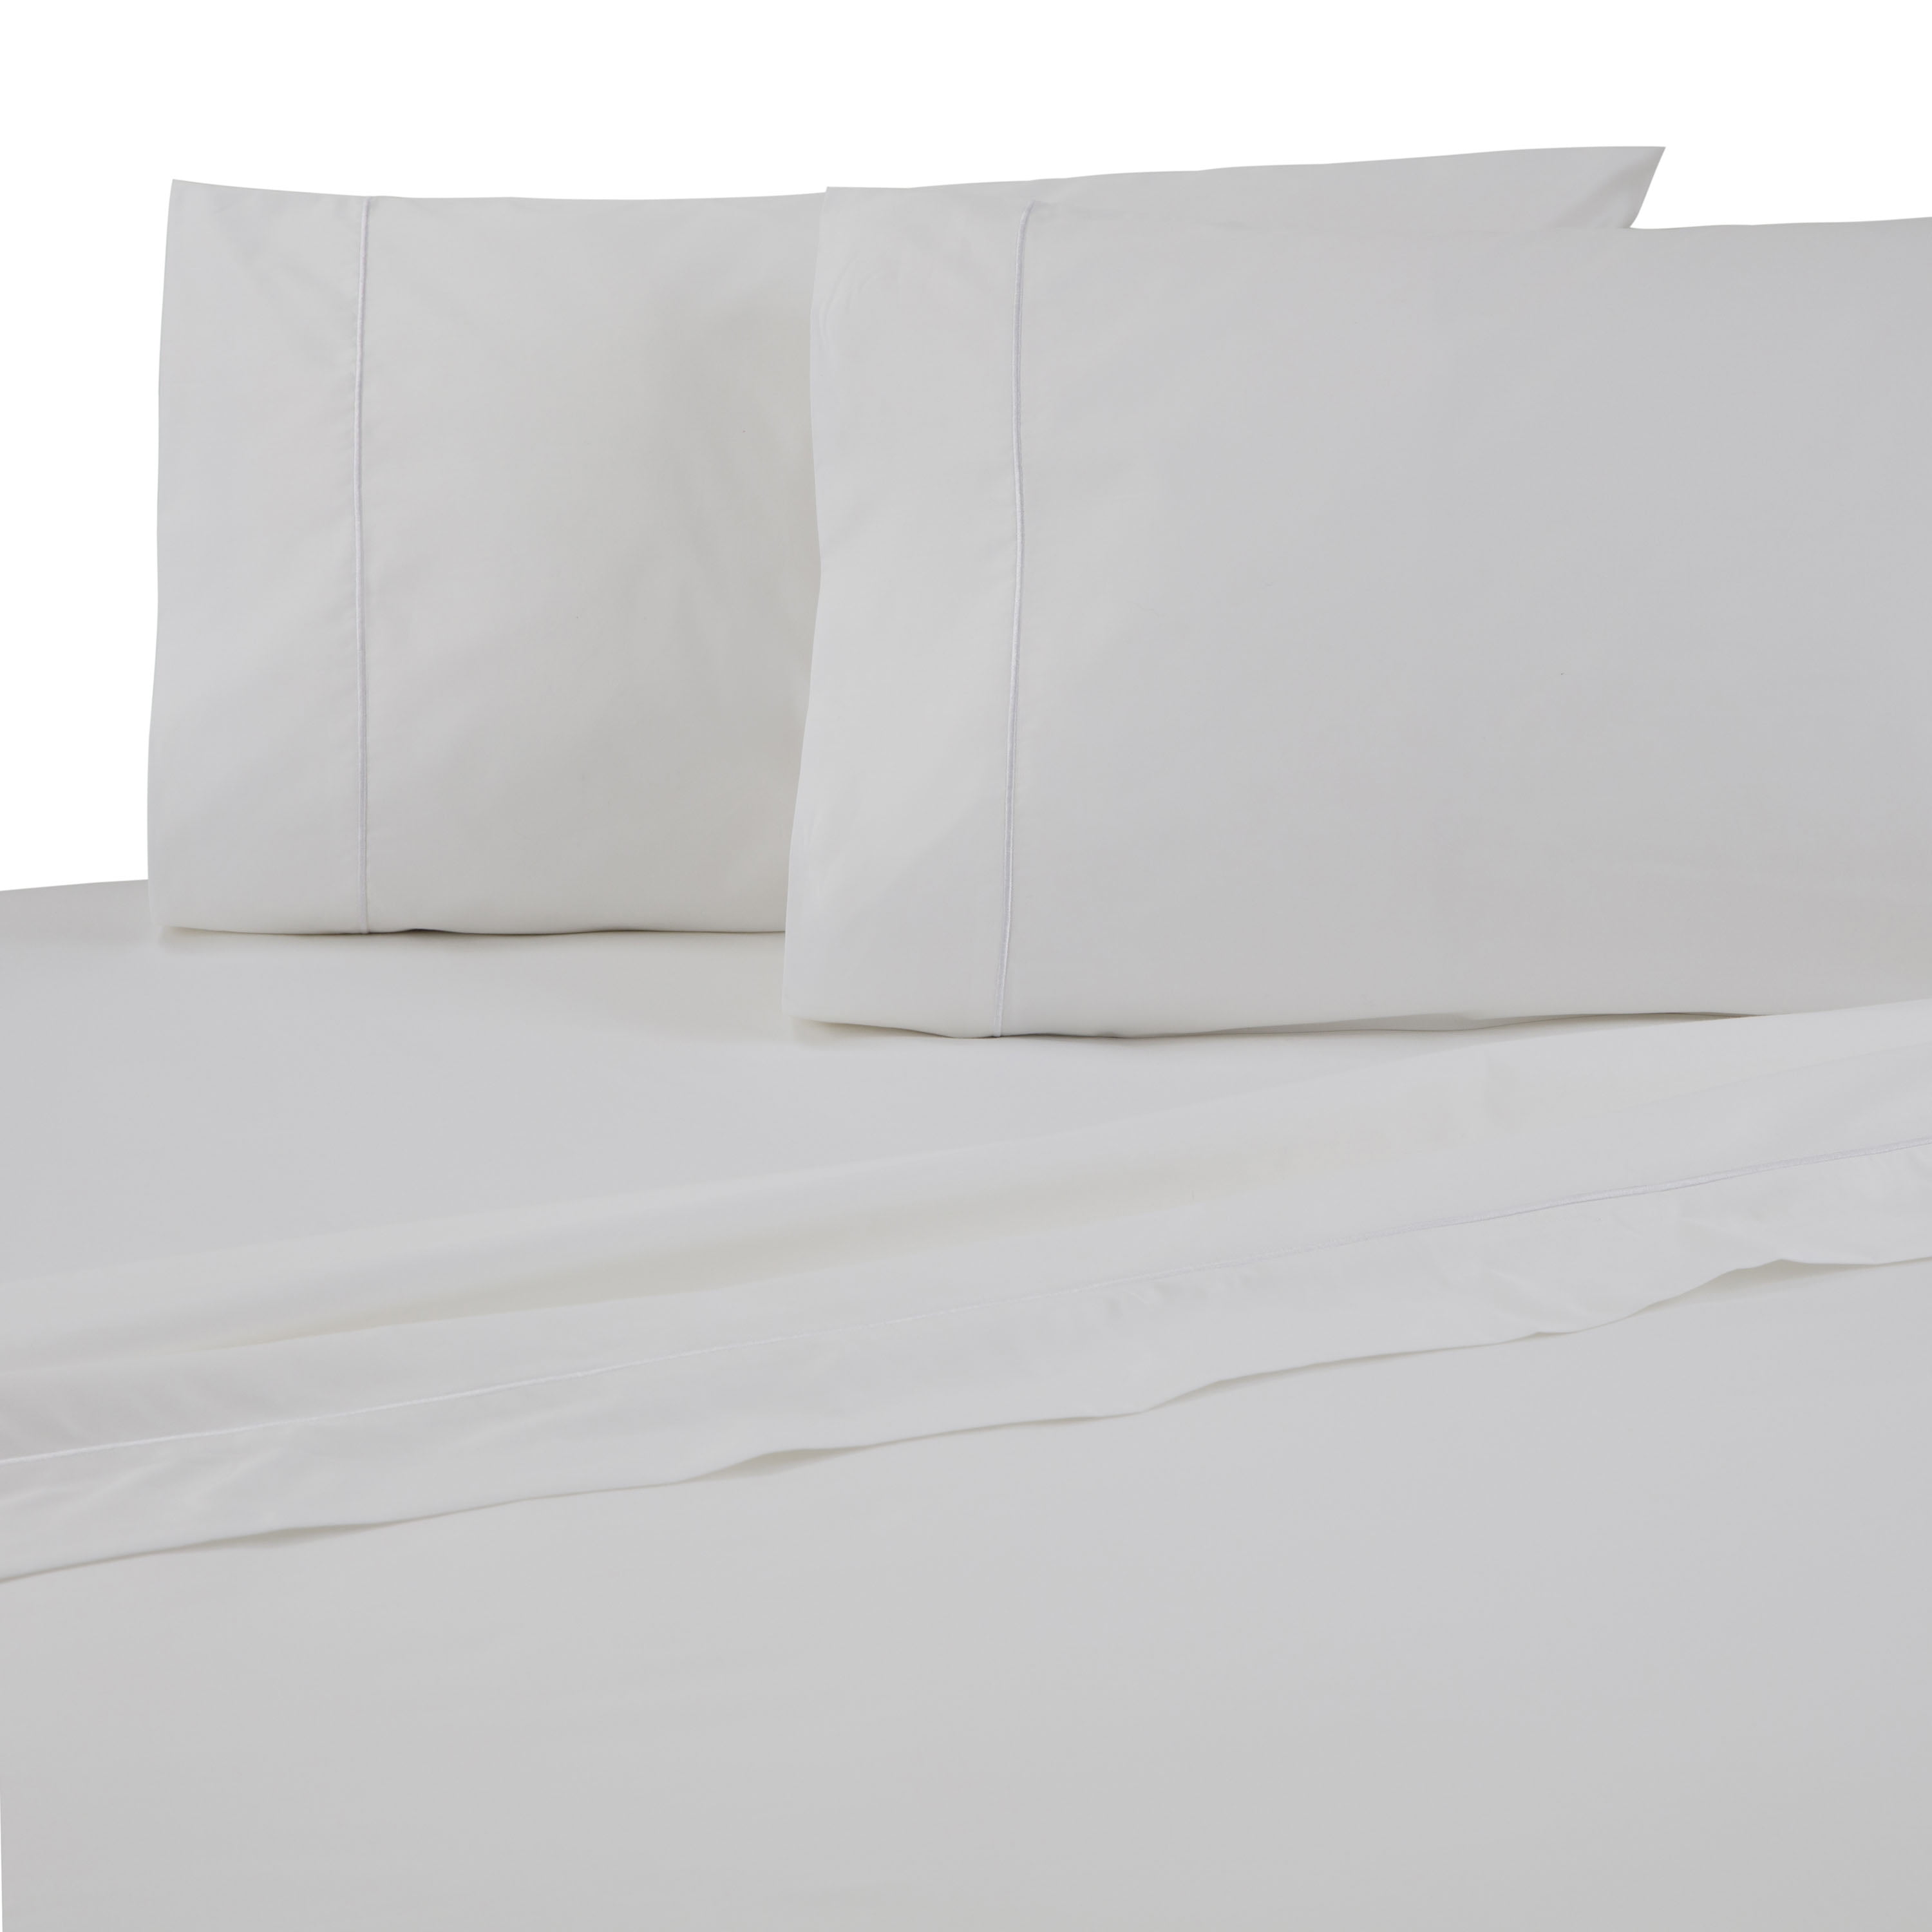 Martex White Blue Stripe Standard Pillowcases Set 400 Thread Count Cotton 